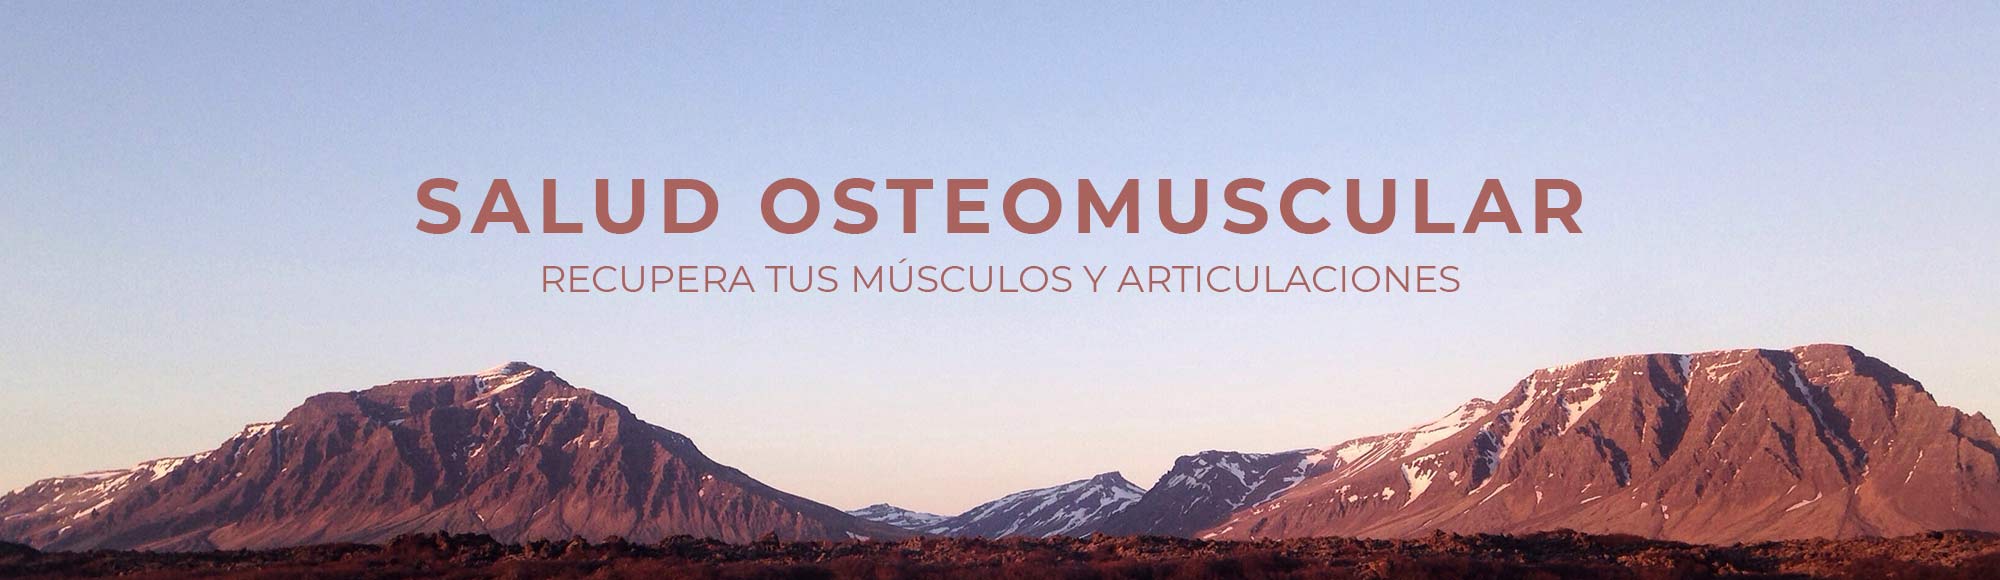 OsteoMuscular